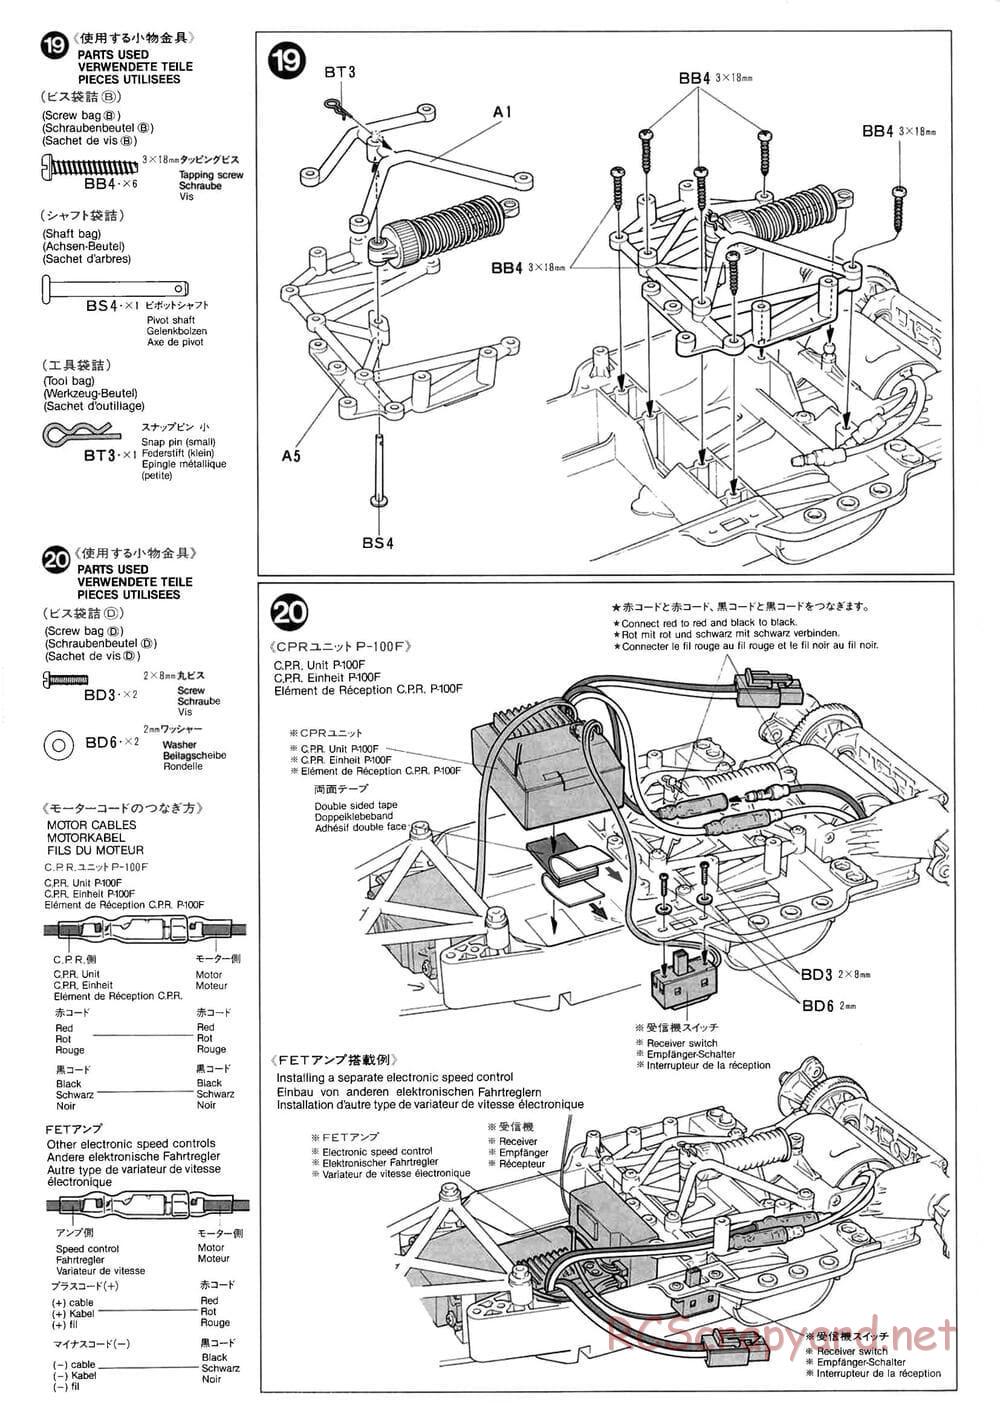 Tamiya - Group-C Chassis - Manual - Page 12